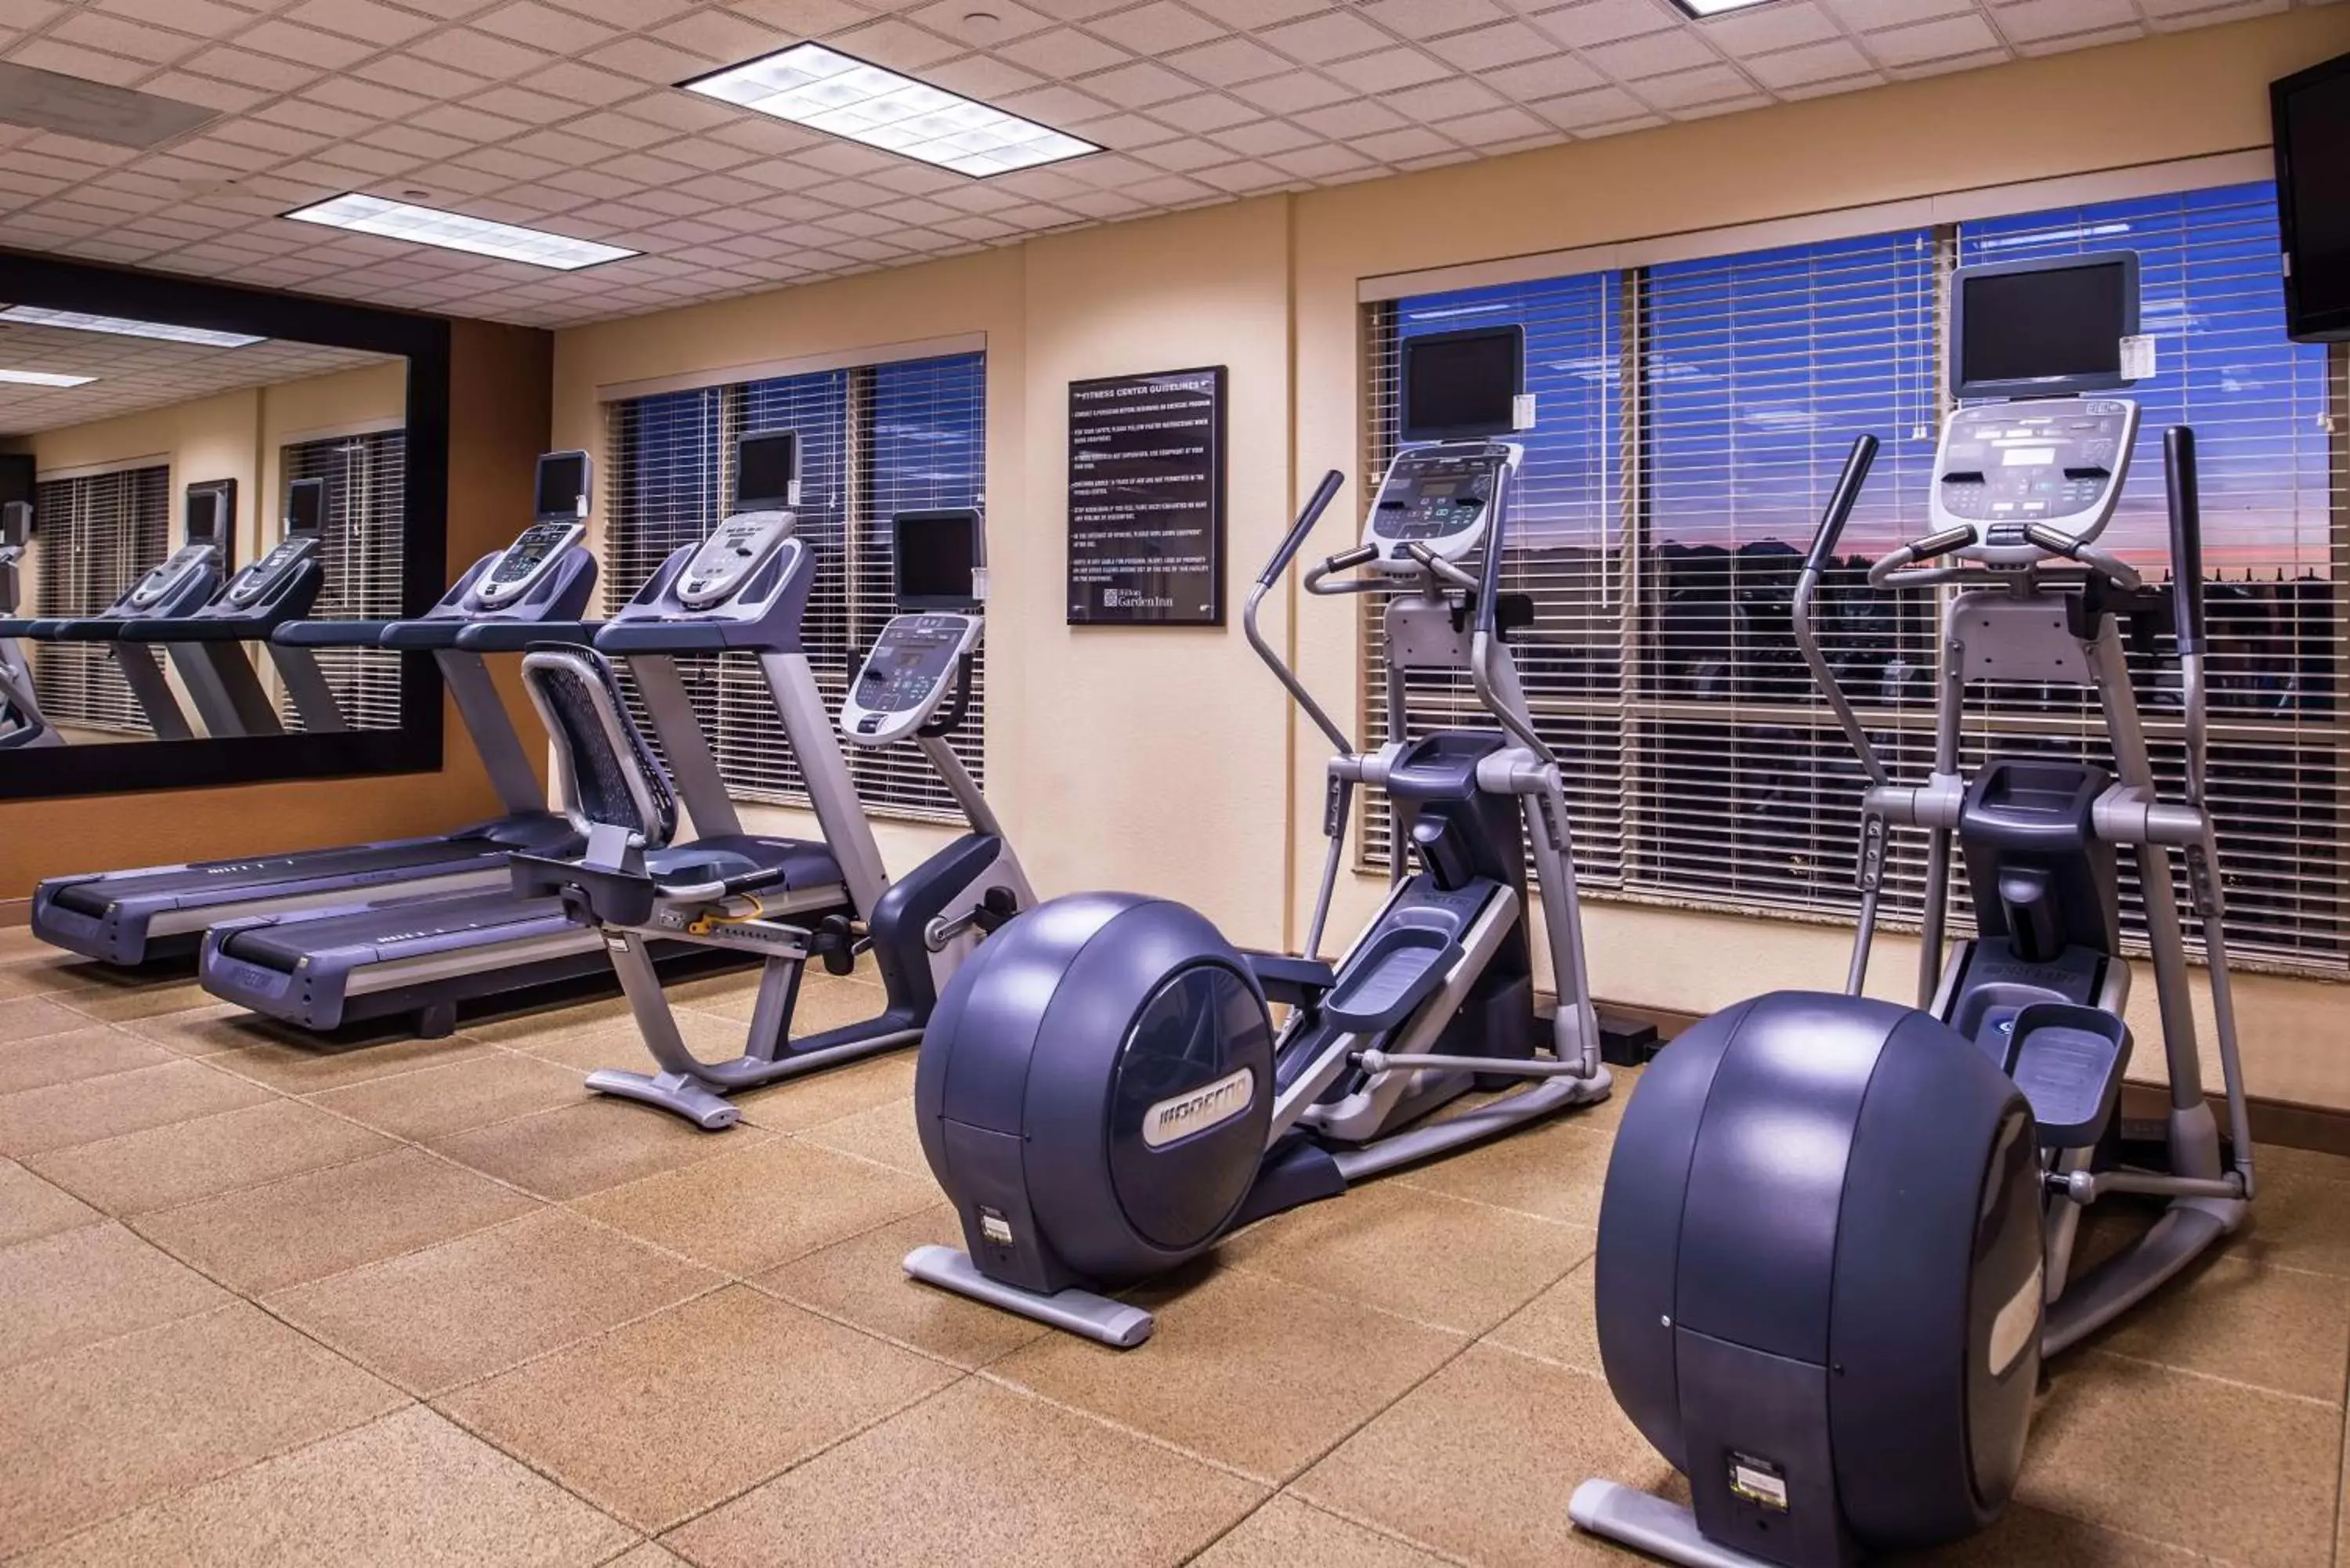 Fitness centre/facilities, Fitness Center/Facilities in Hilton Garden Inn Bend